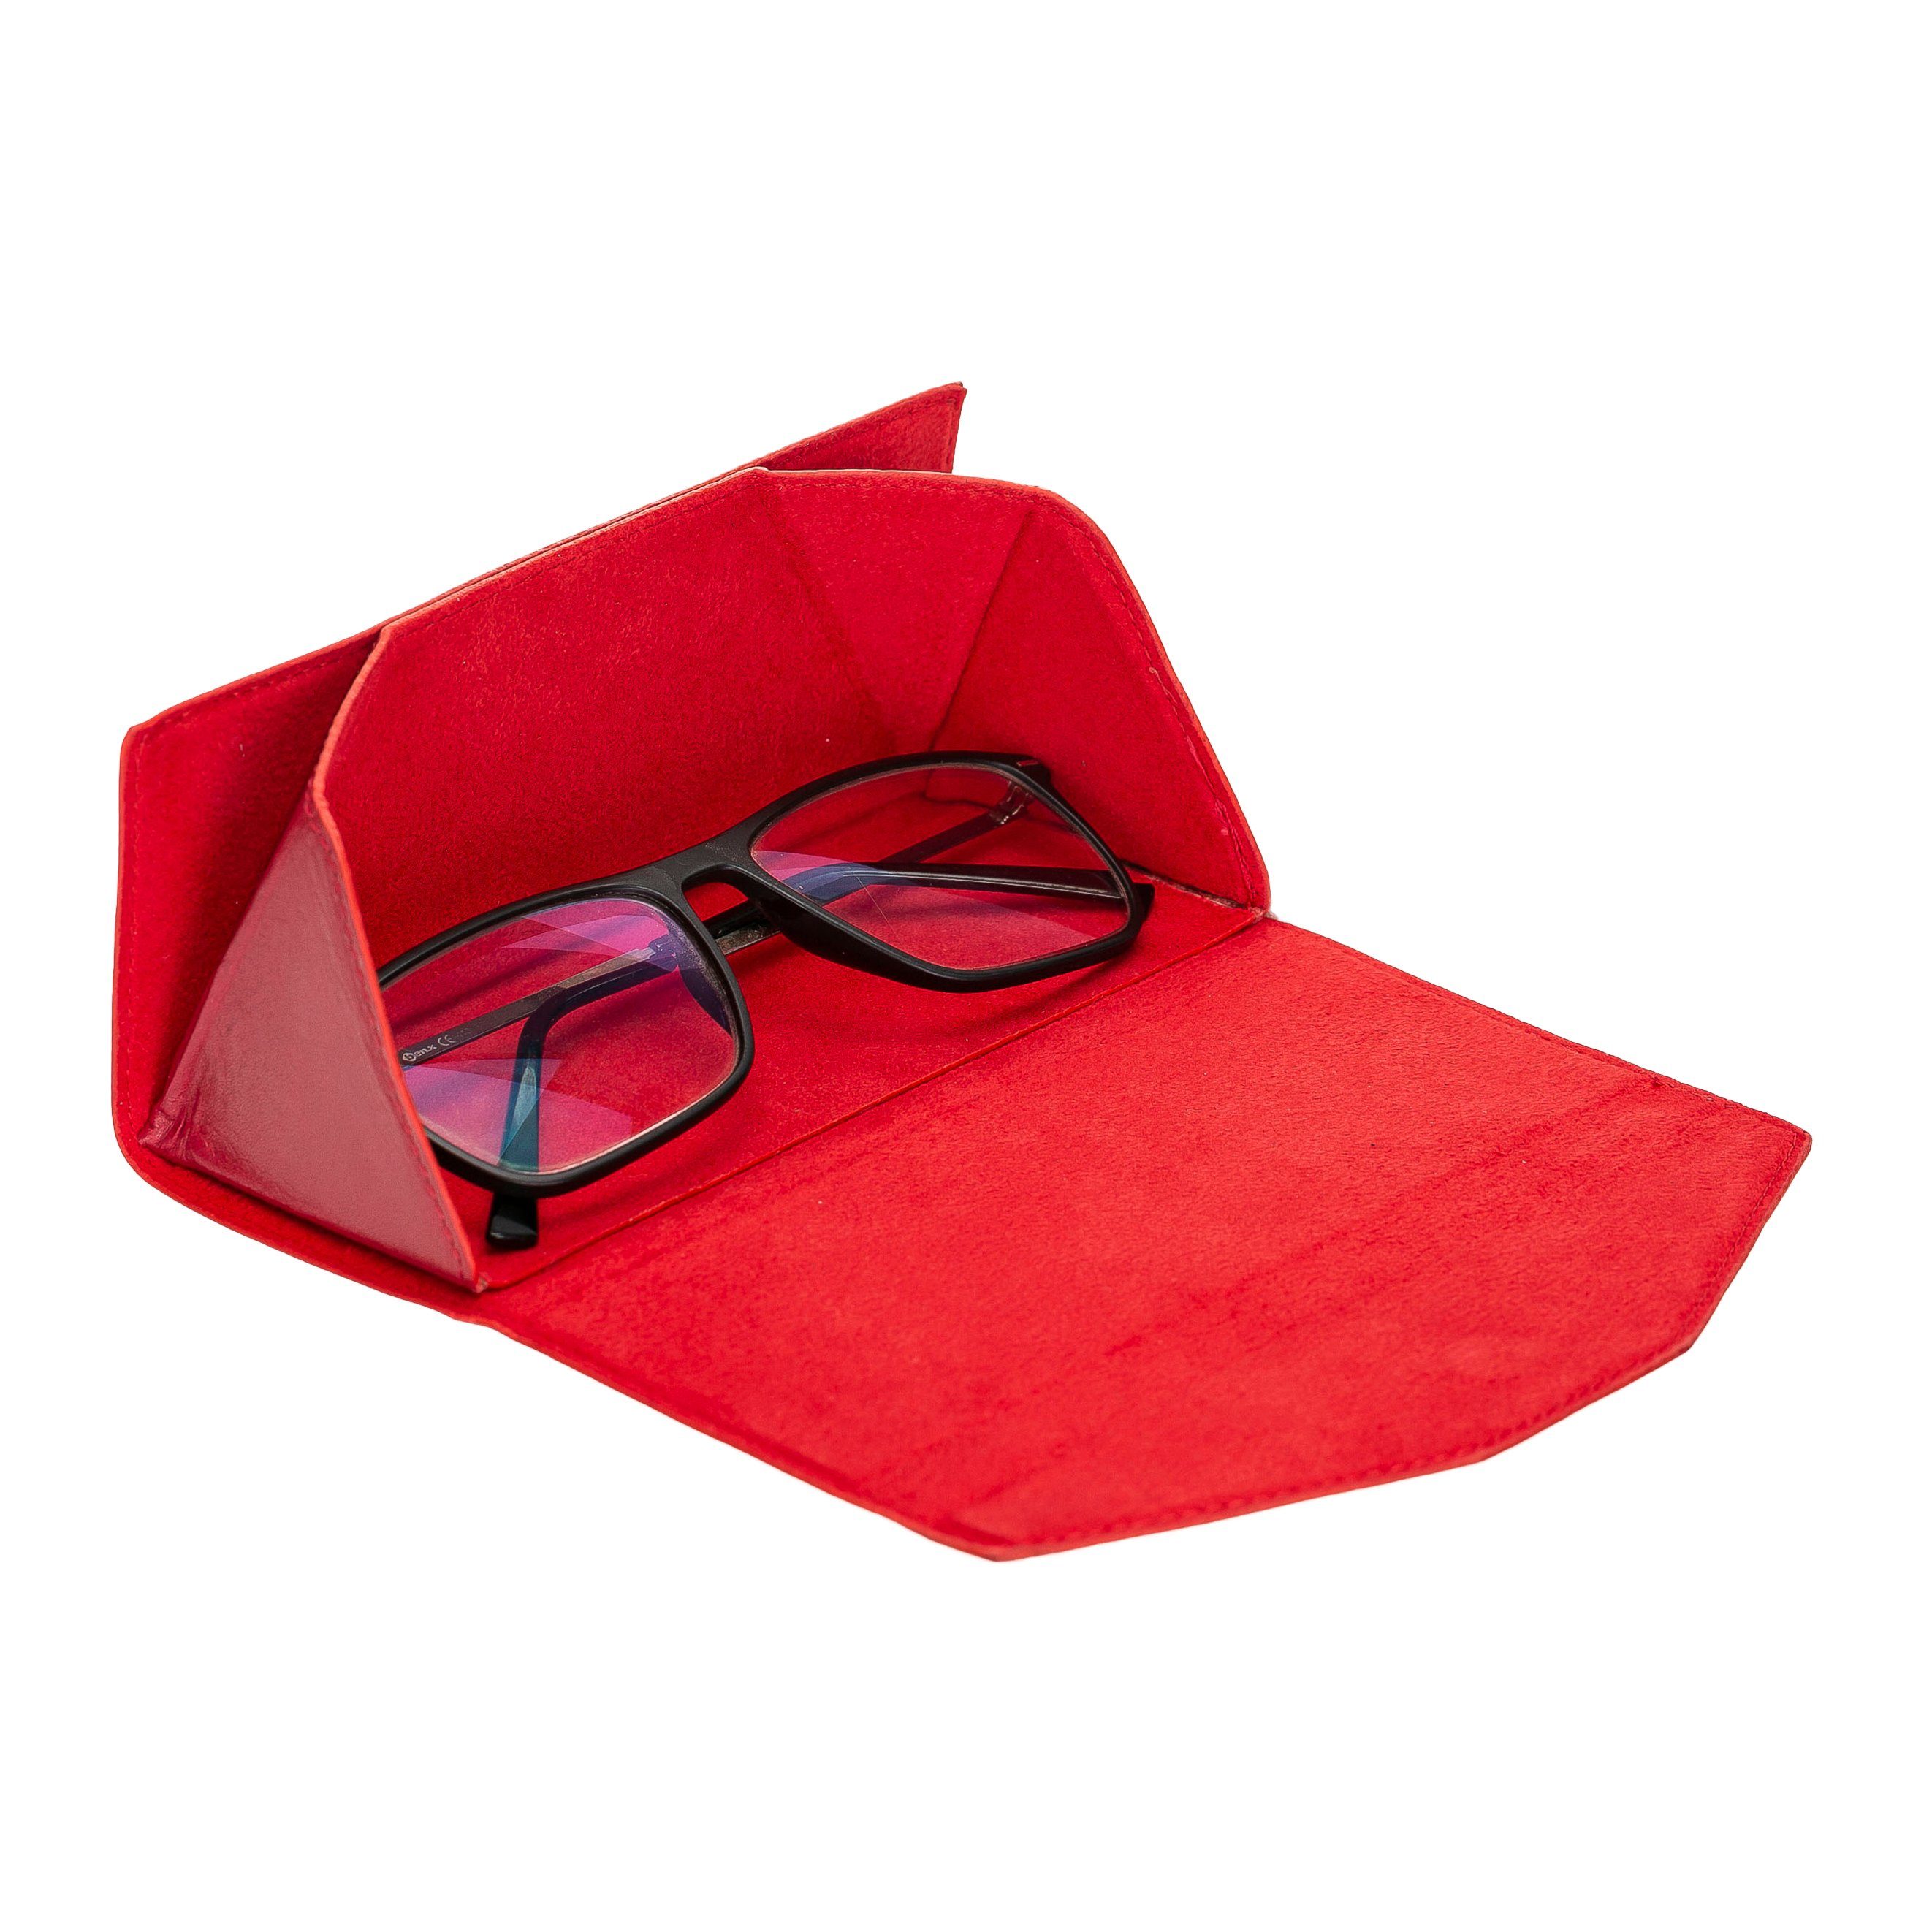 Solo Pelle Rot Brillenetui Brillenbox Faltbares aus echtem falten Brillenetui tragbare Leder, zum